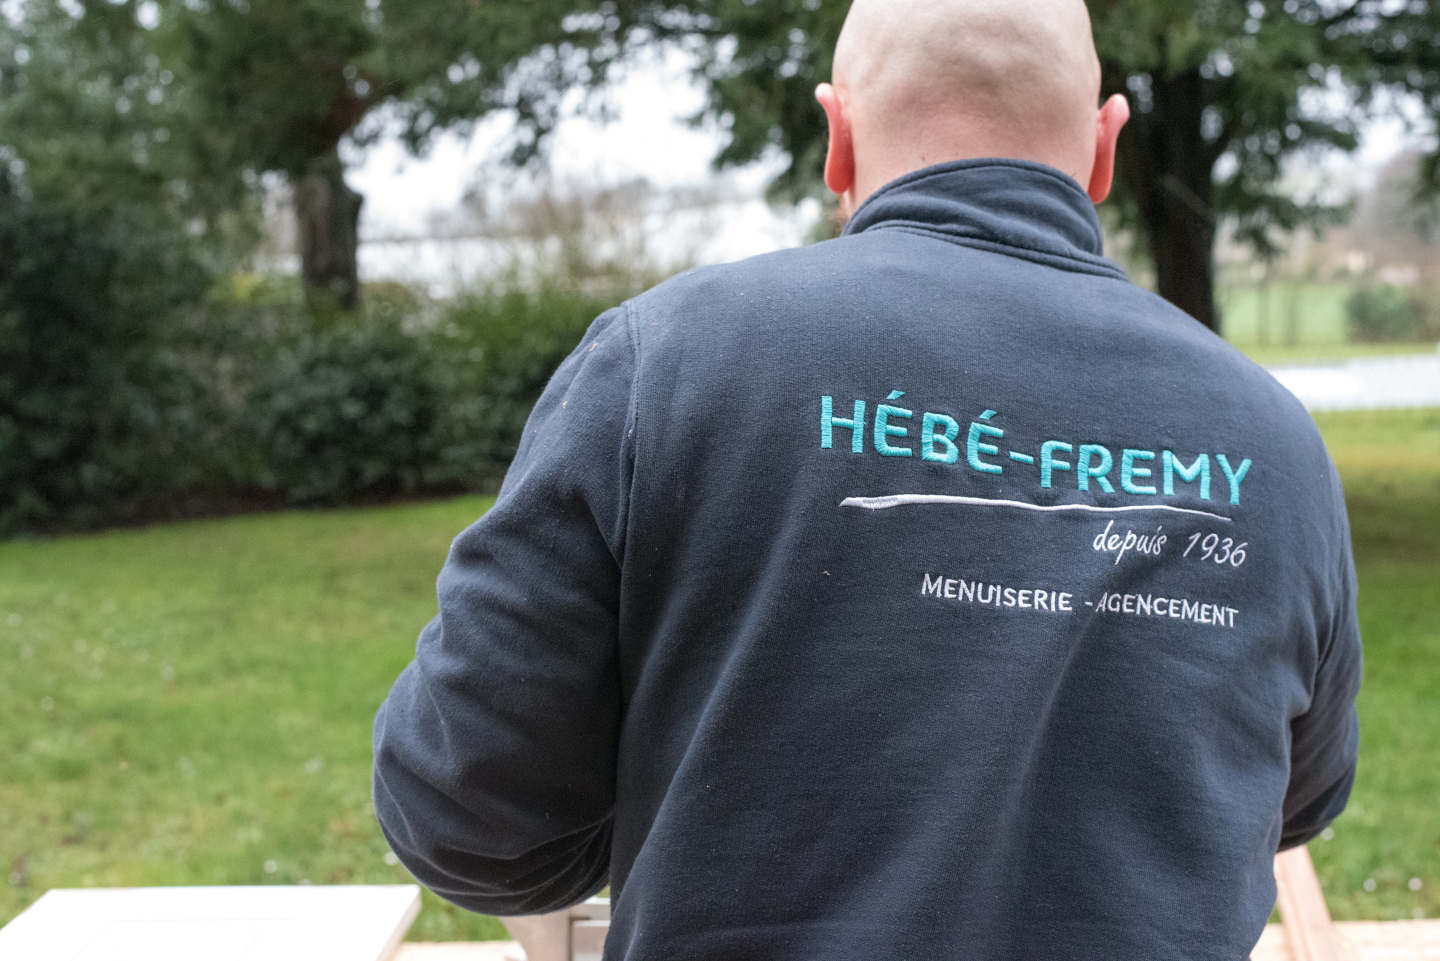 HEBE-FREMY Menuiserie Bois-Alu-PVC